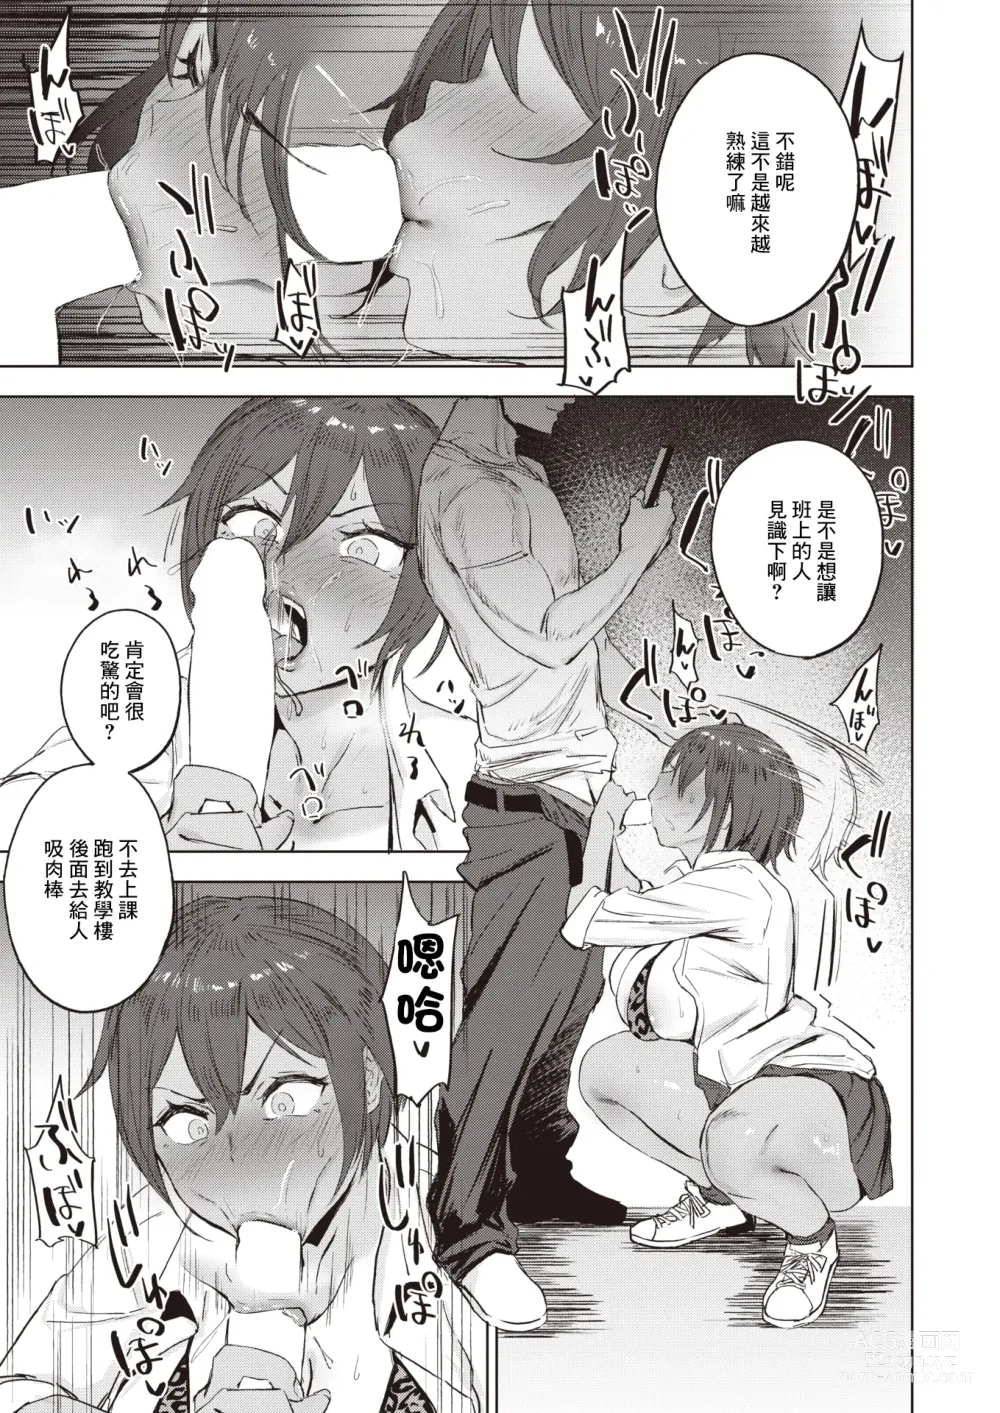 Page 20 of manga Kimochii  Koto  ni wa Sakaraenai - musclehead girl cant resist orgasm